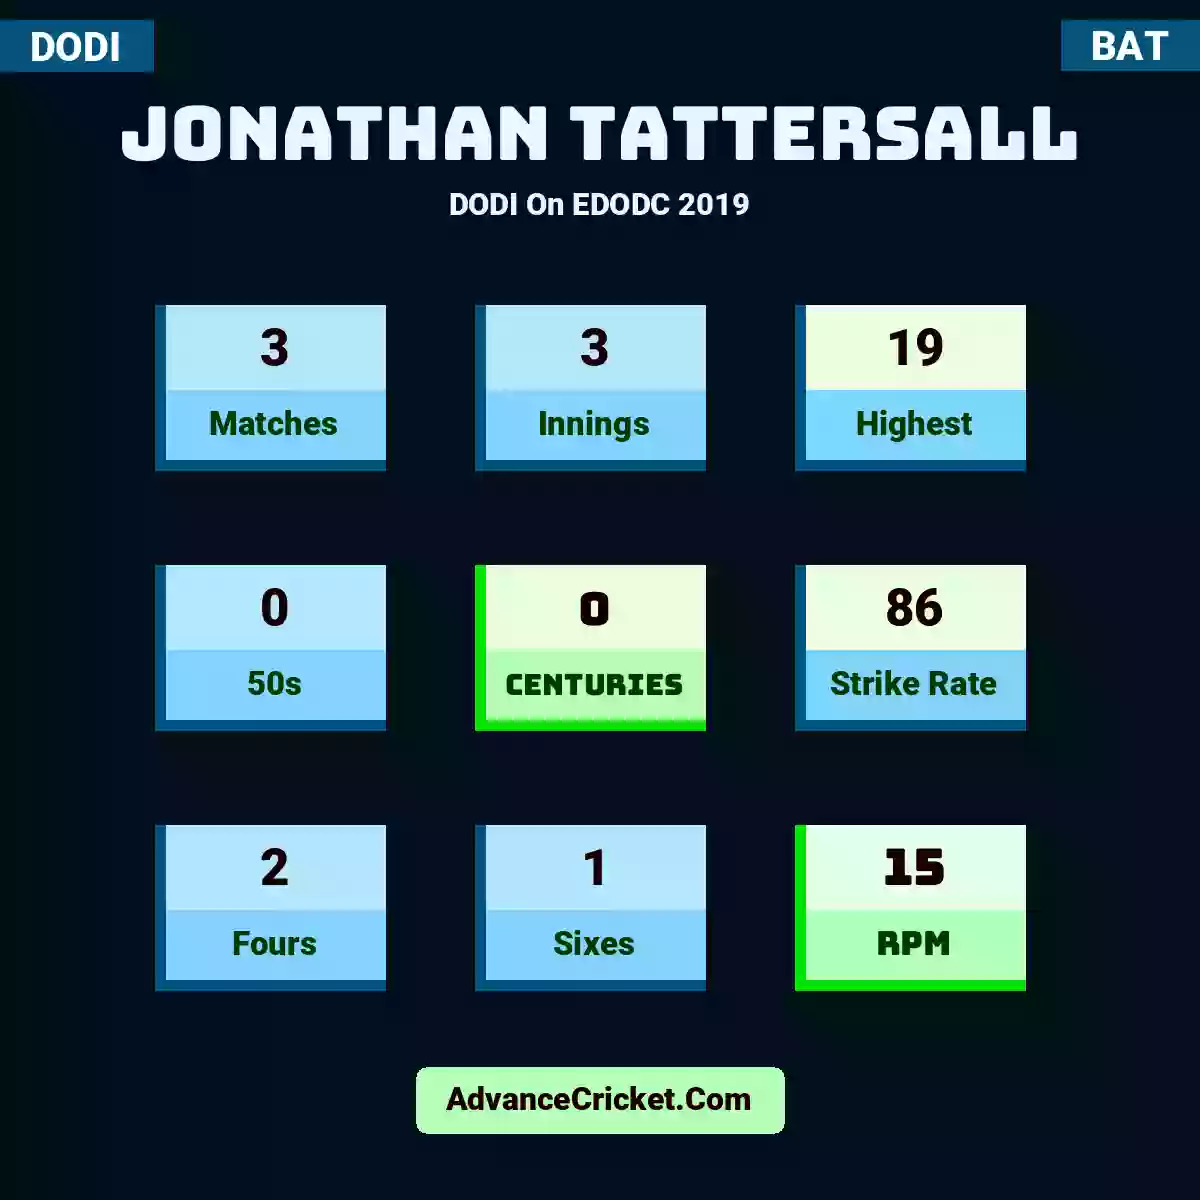 Jonathan Tattersall DODI  On EDODC 2019, Jonathan Tattersall played 3 matches, scored 19 runs as highest, 0 half-centuries, and 0 centuries, with a strike rate of 86. J.Tattersall hit 2 fours and 1 sixes, with an RPM of 15.